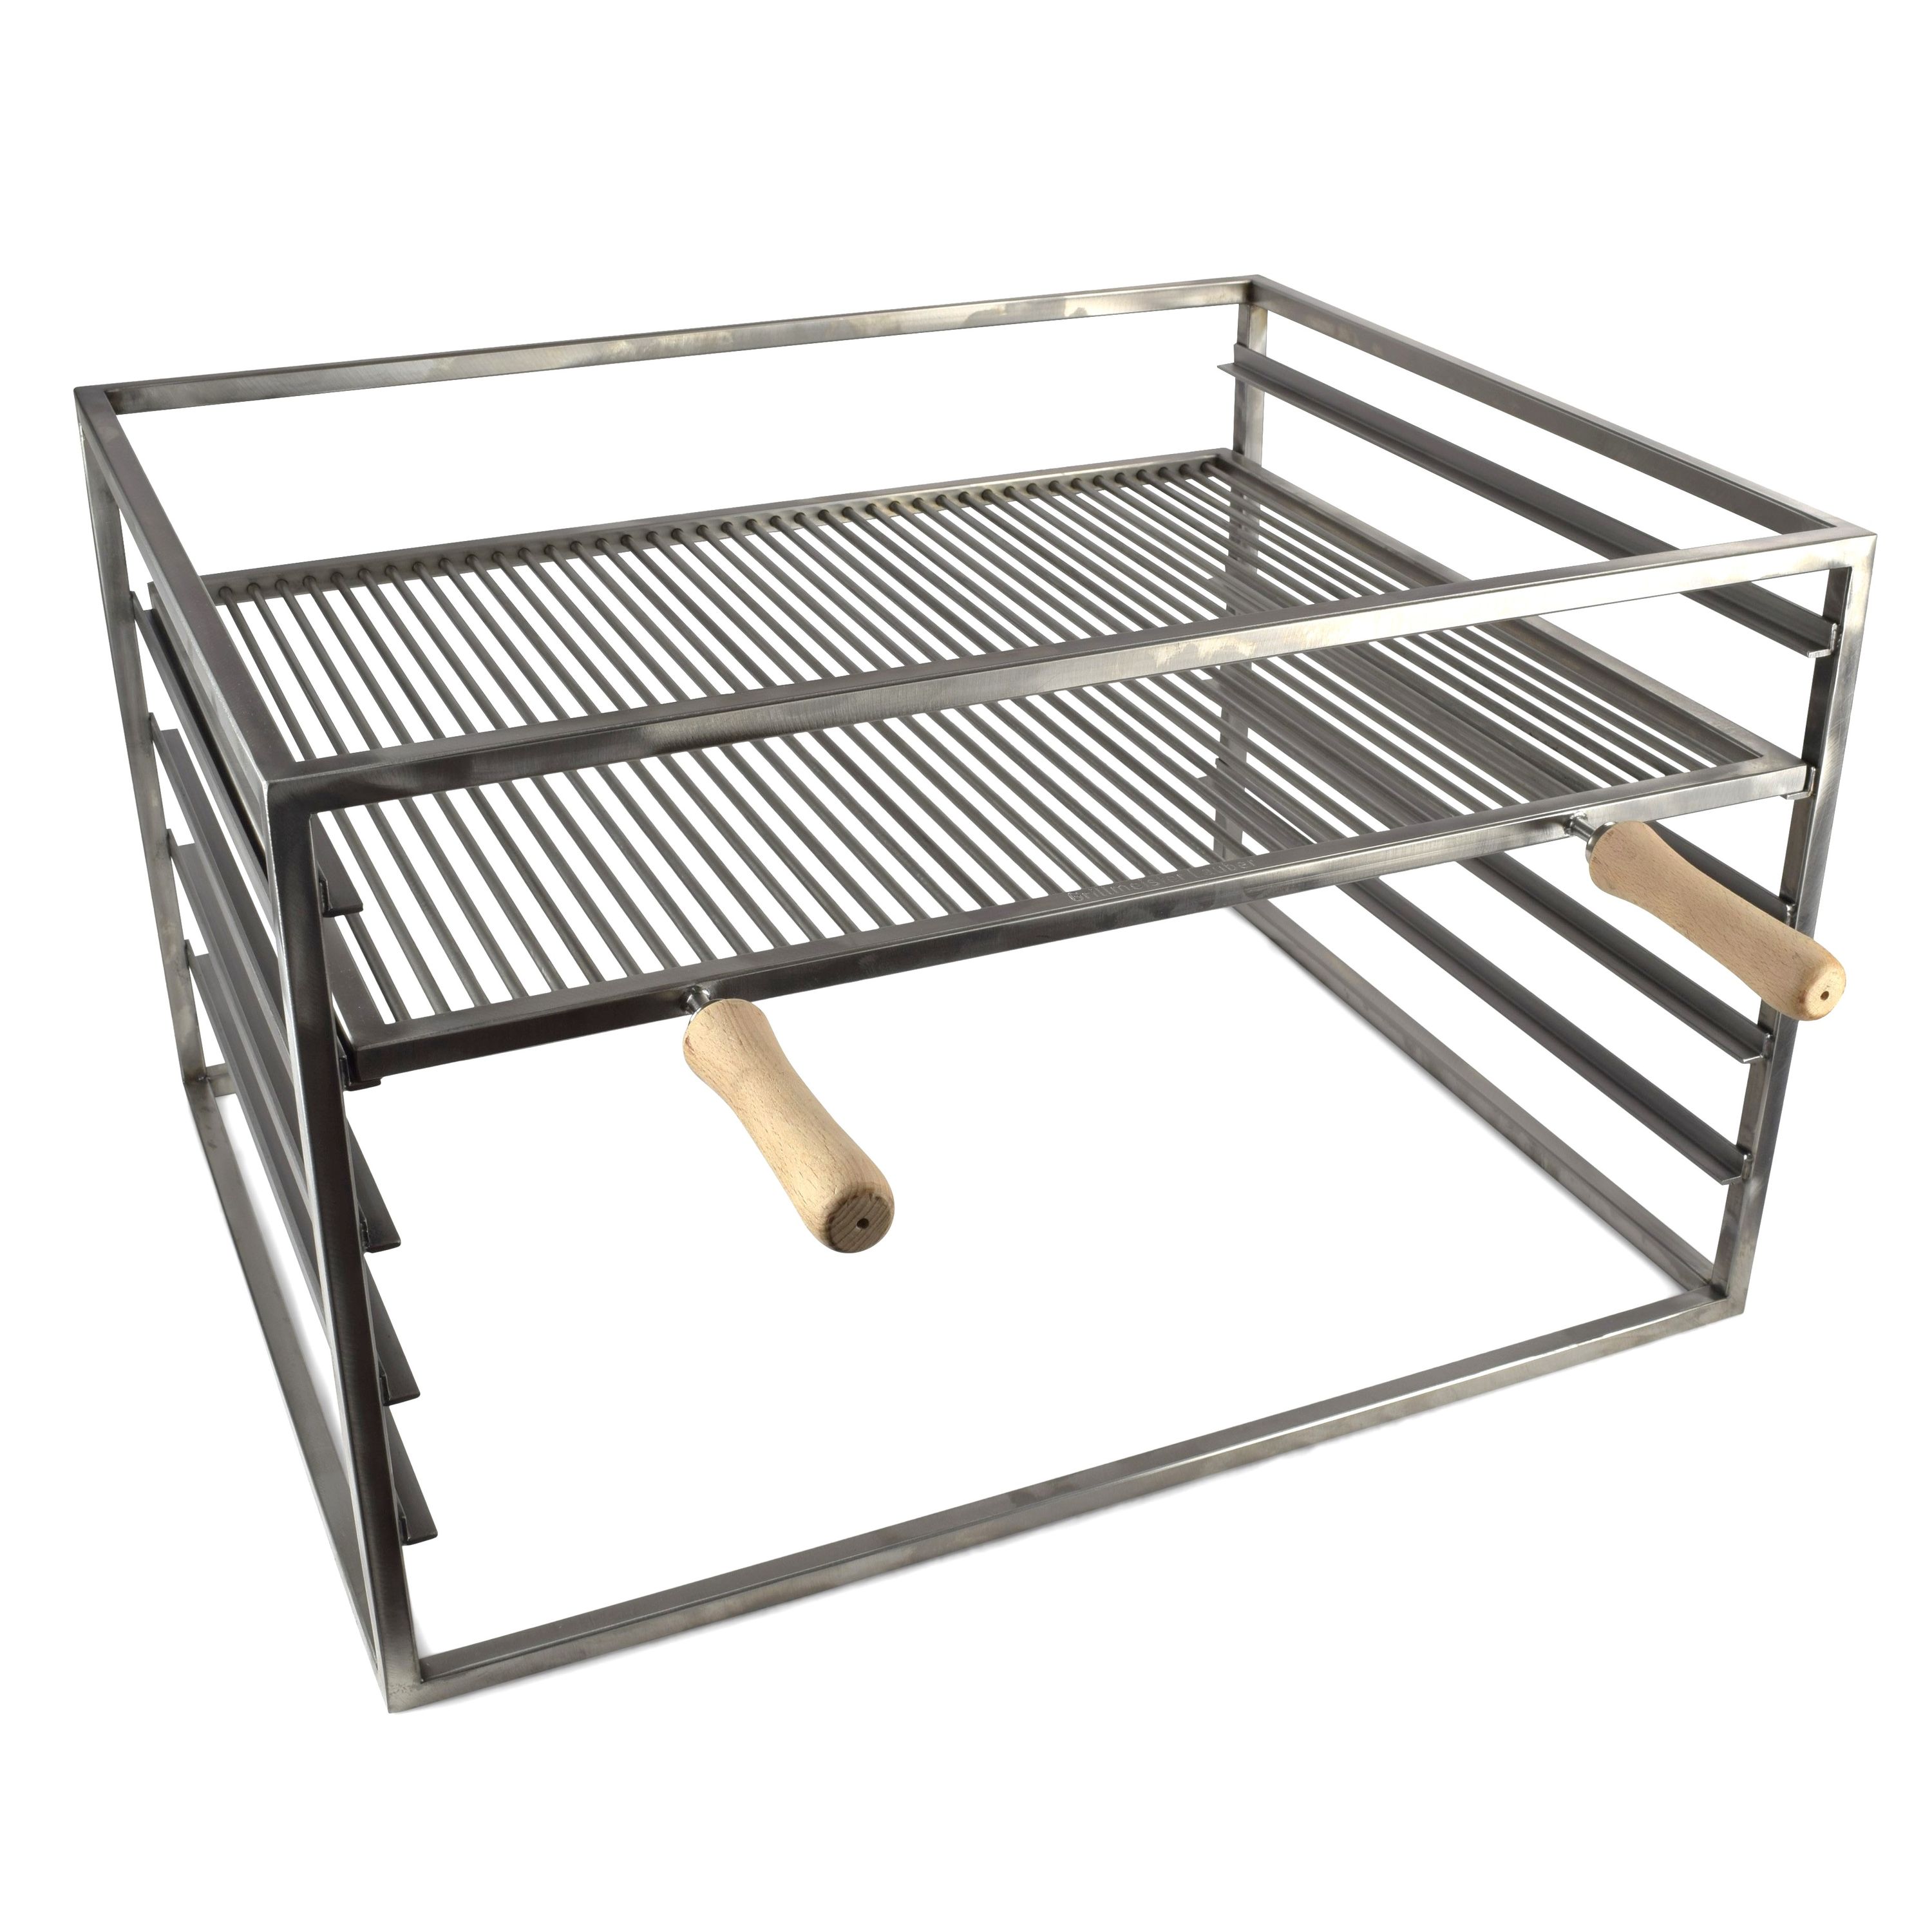 Slide-in grill rack